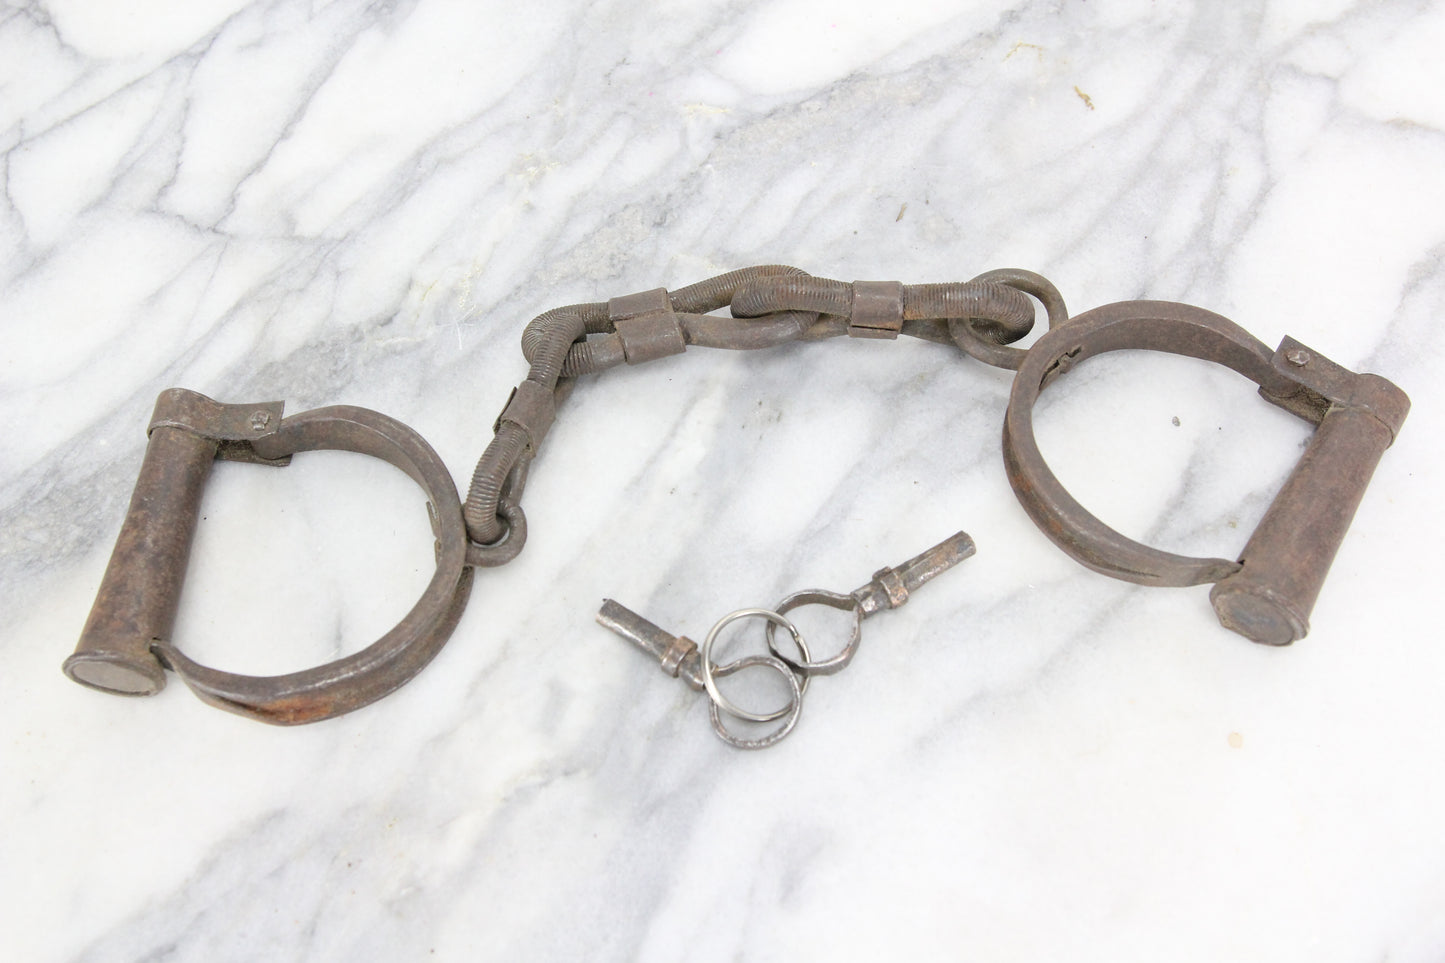 Antique Civil War Era Primitive Handcuffs with Two Original Keys